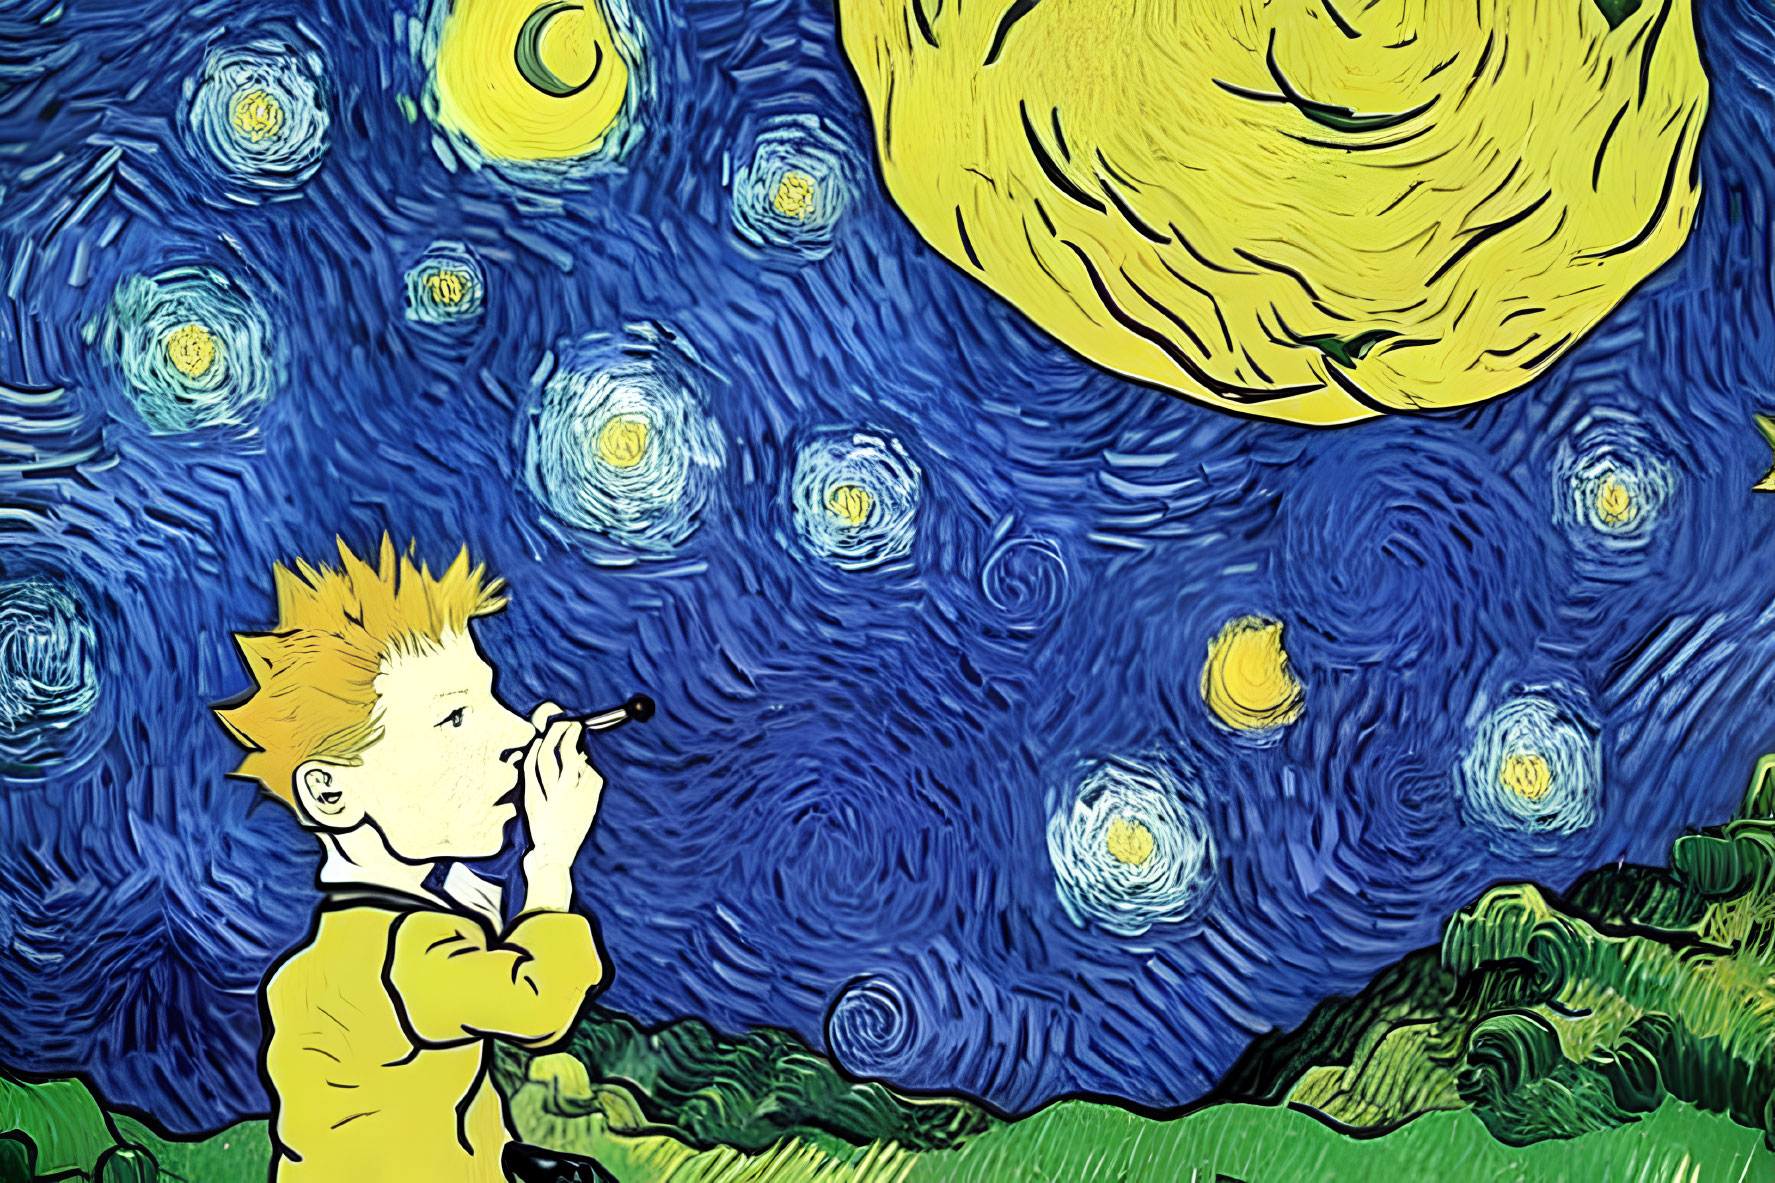 Stylized illustration of boy with spiky hair under night sky